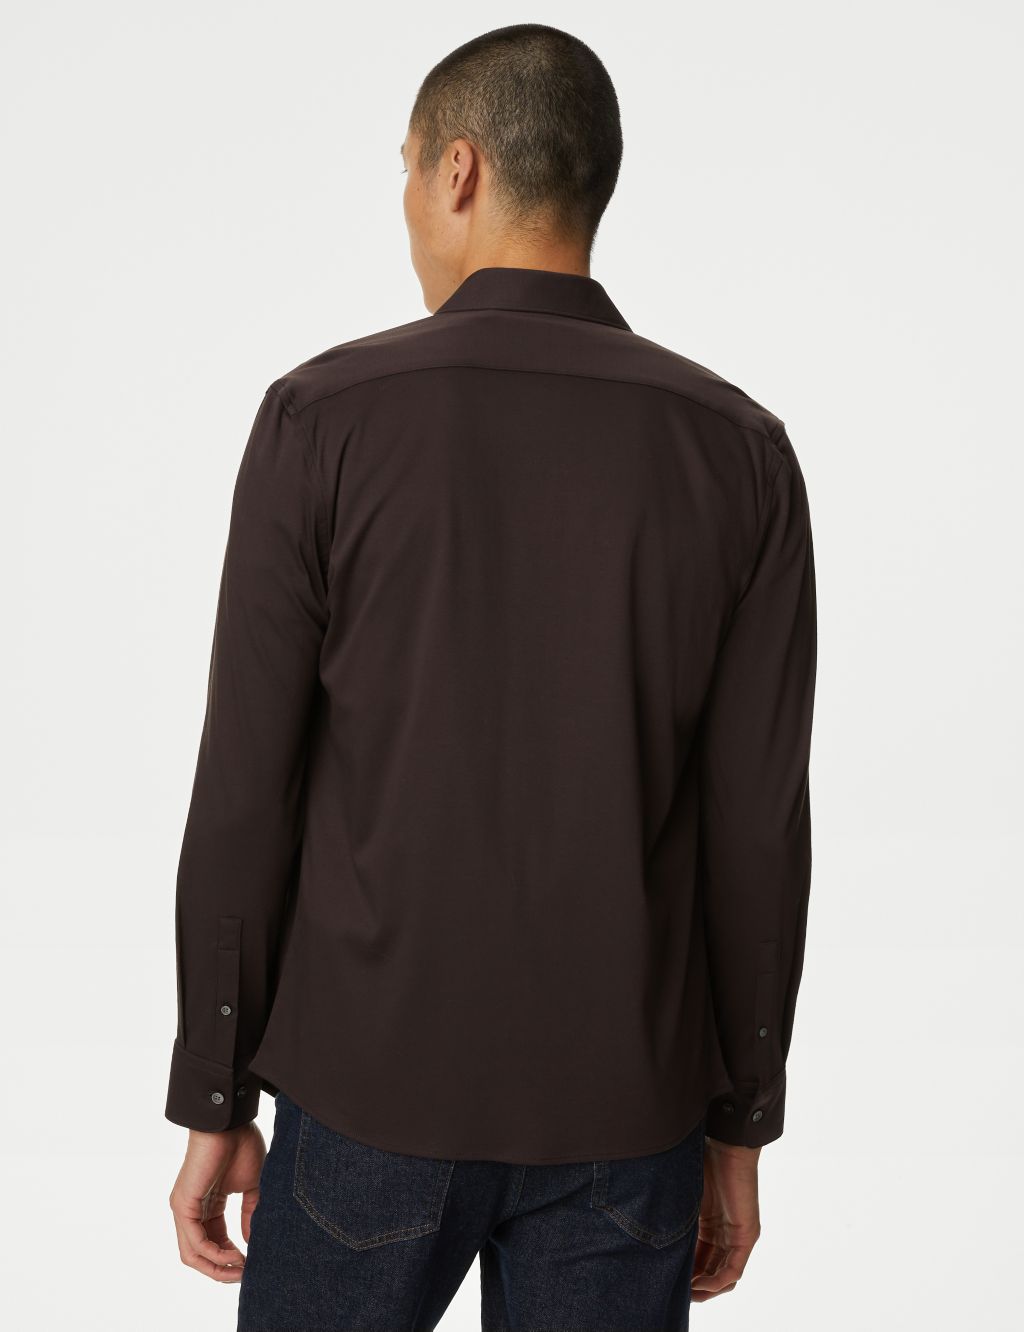 Slim Fit Jersey Cotton Shirt image 5